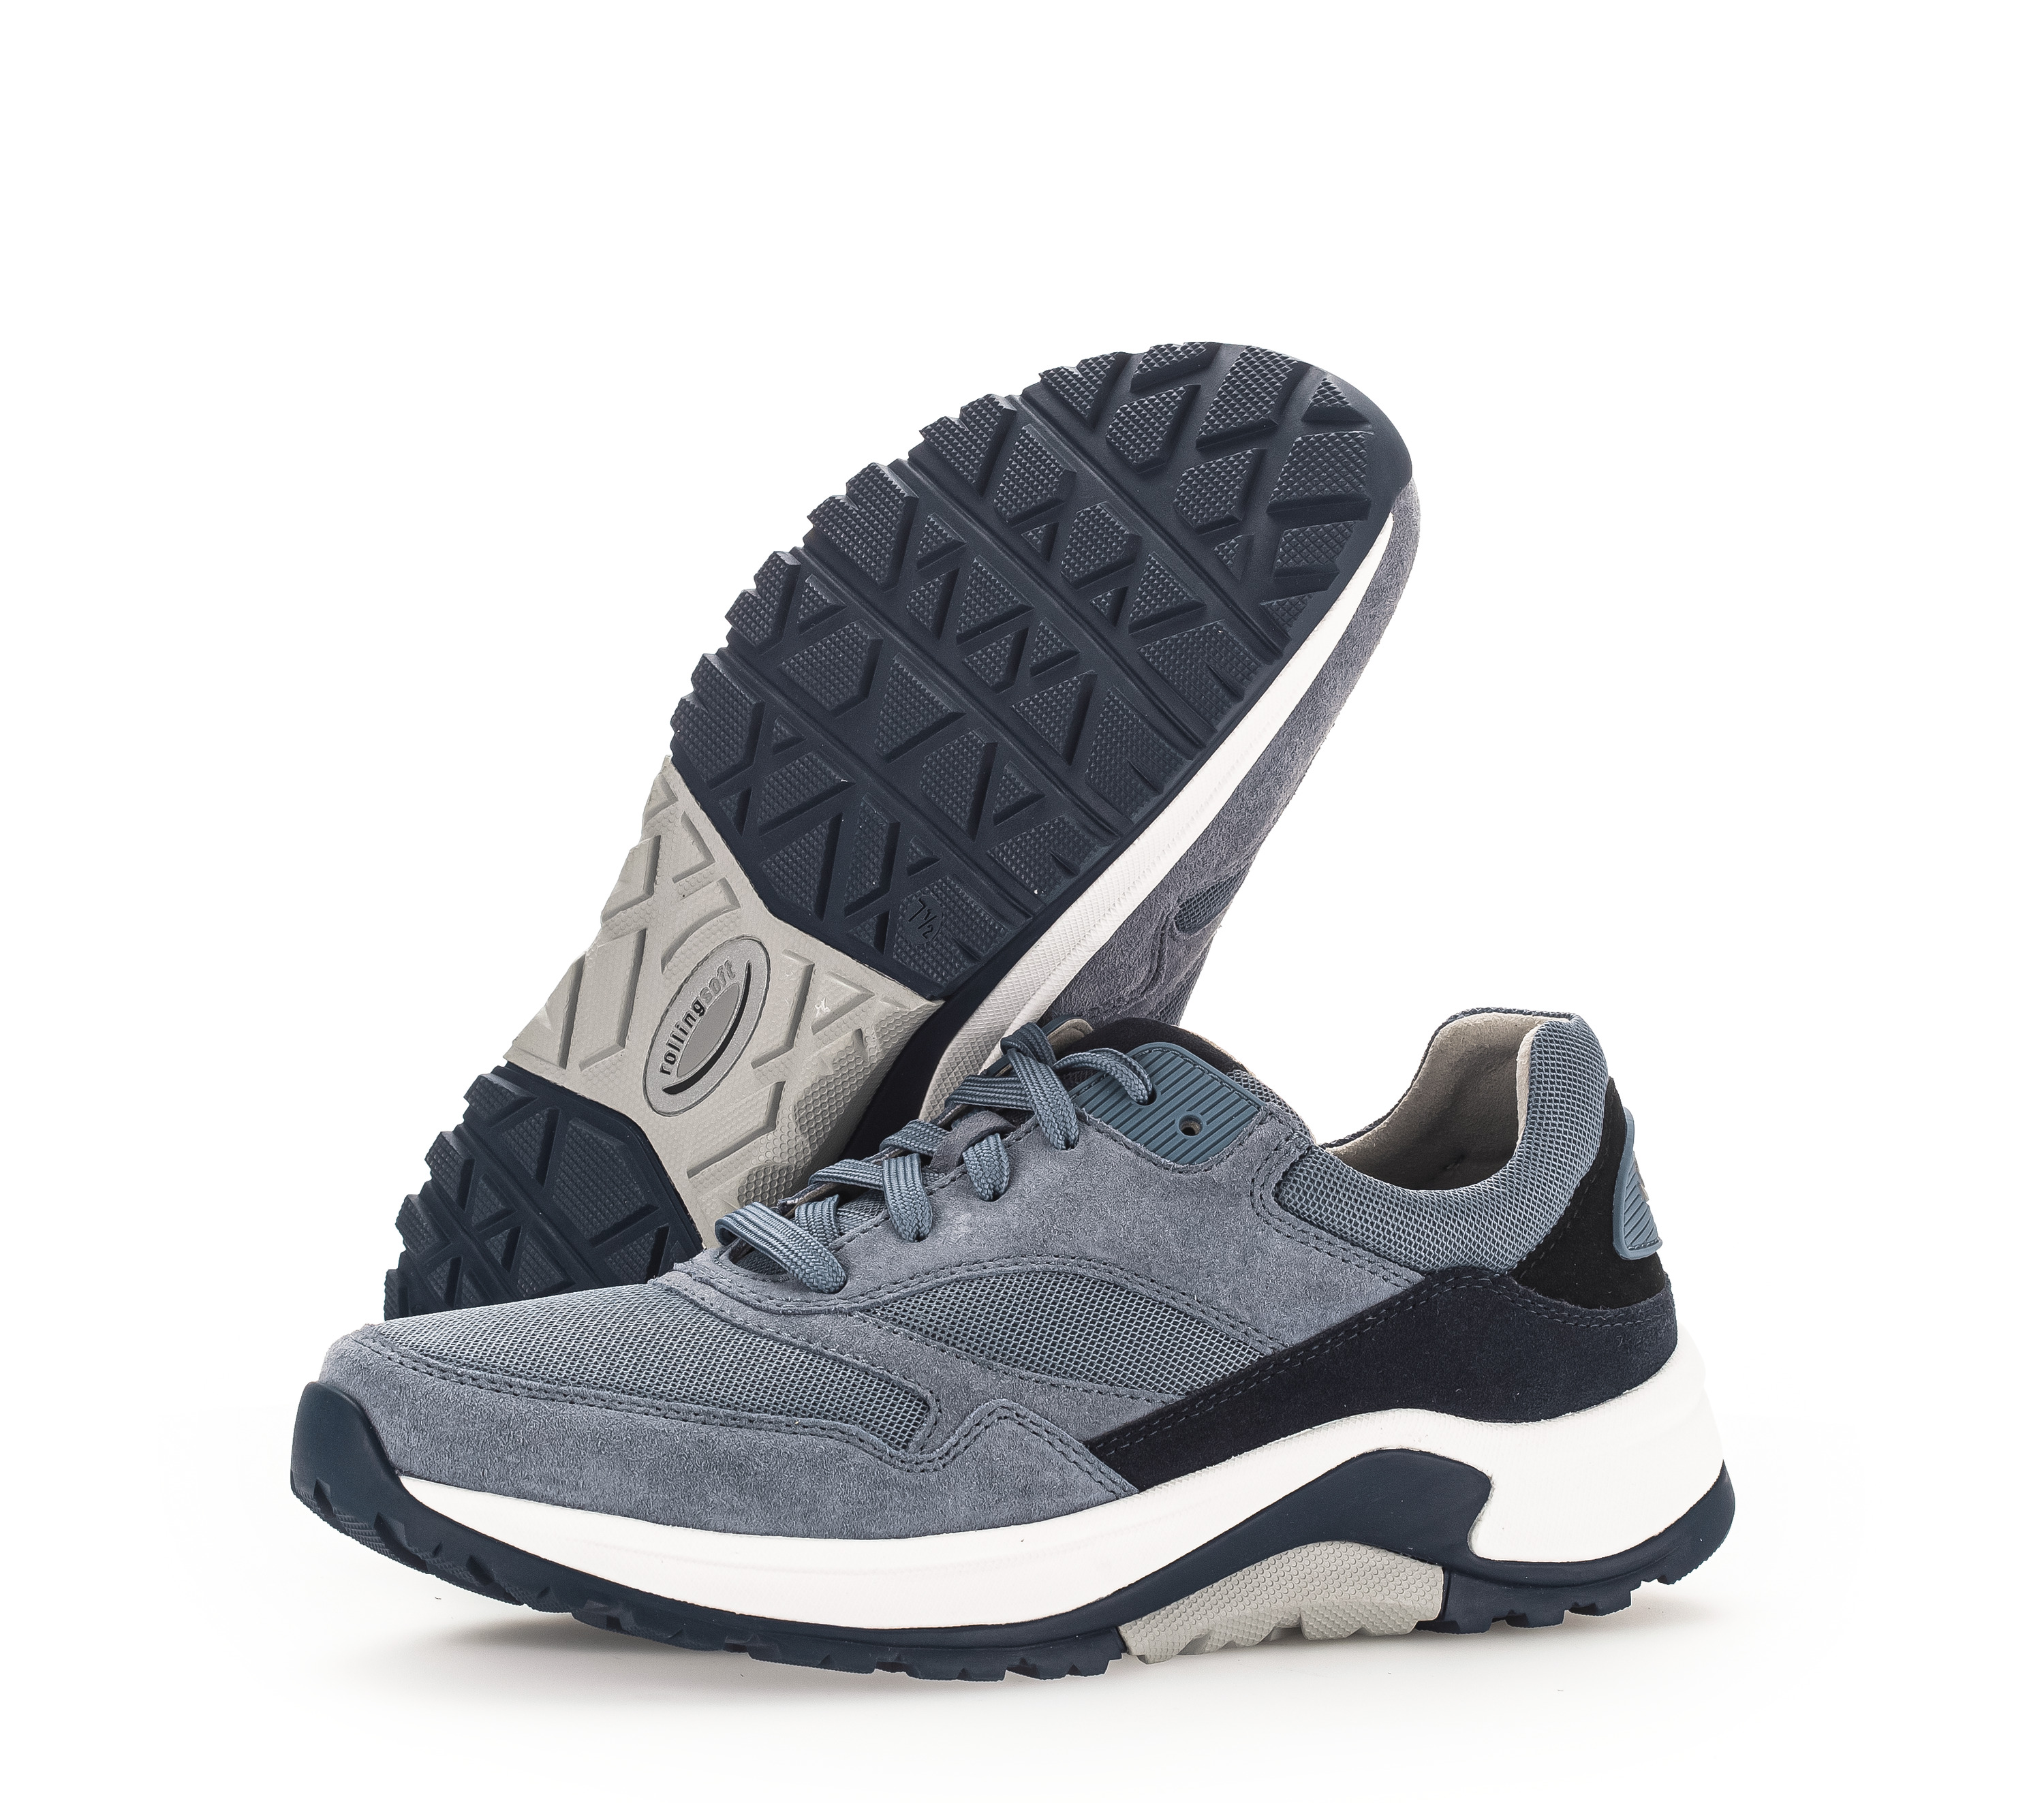 Gabor Shoes Sneaker - Nautic / Marine / Schwarz Leder/Textil